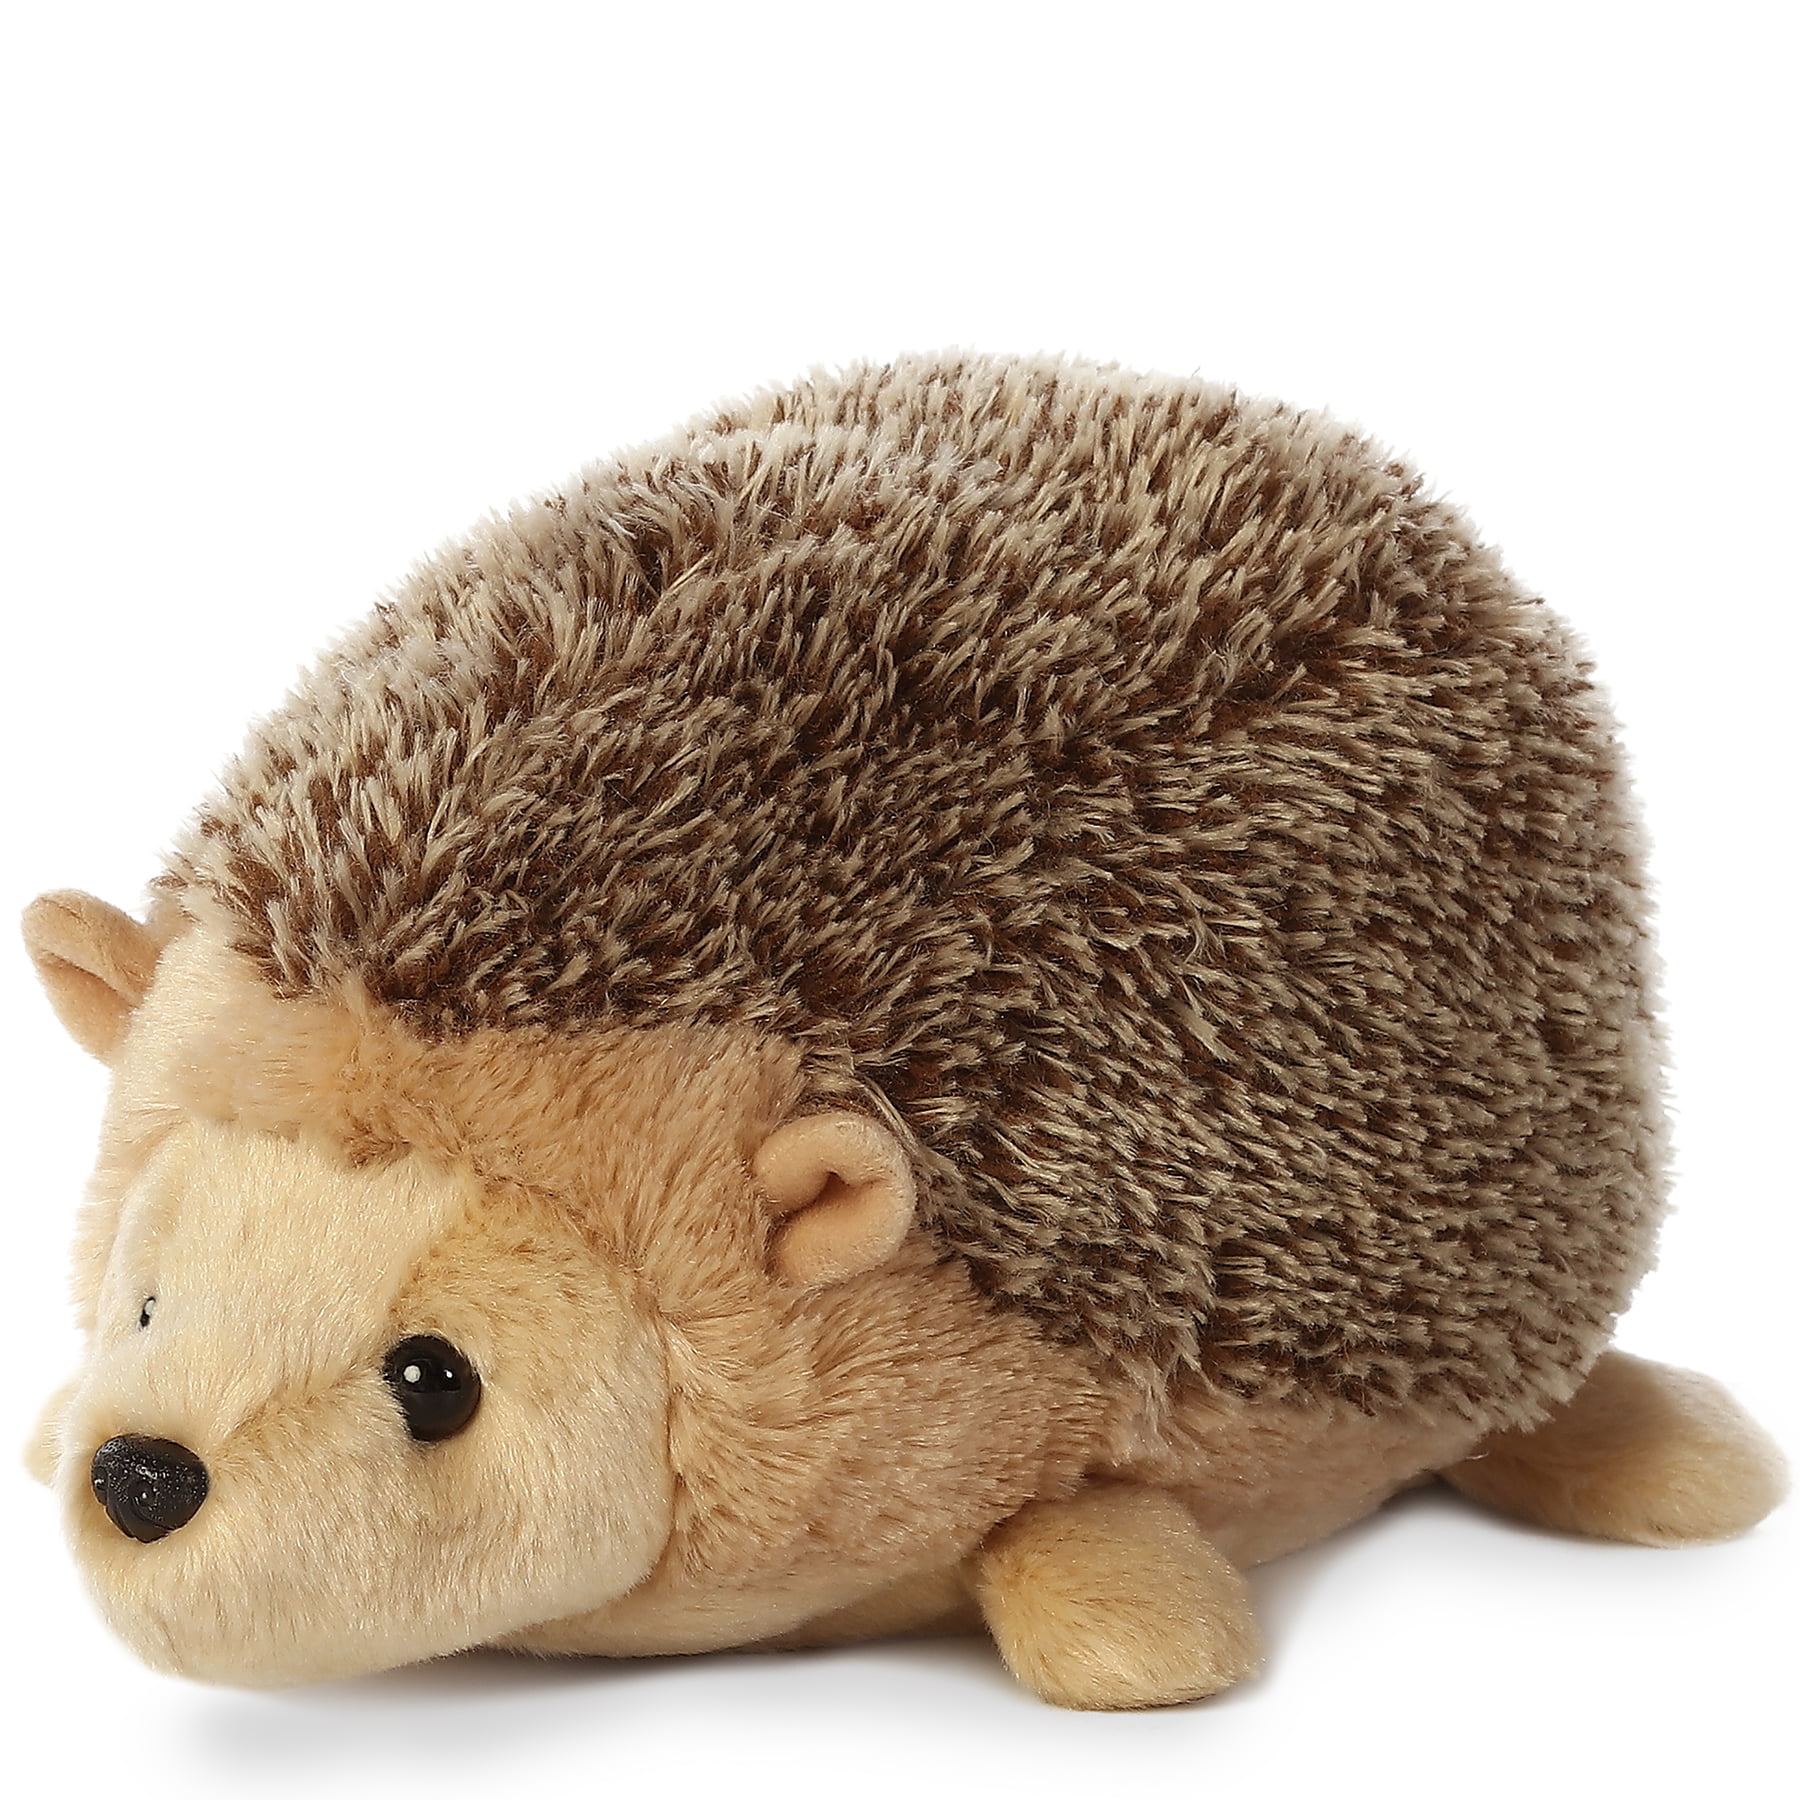 Mini Hedgehog Plush Toy Stuffed Animal 5  Brown Tan Cuddle Toy /5 